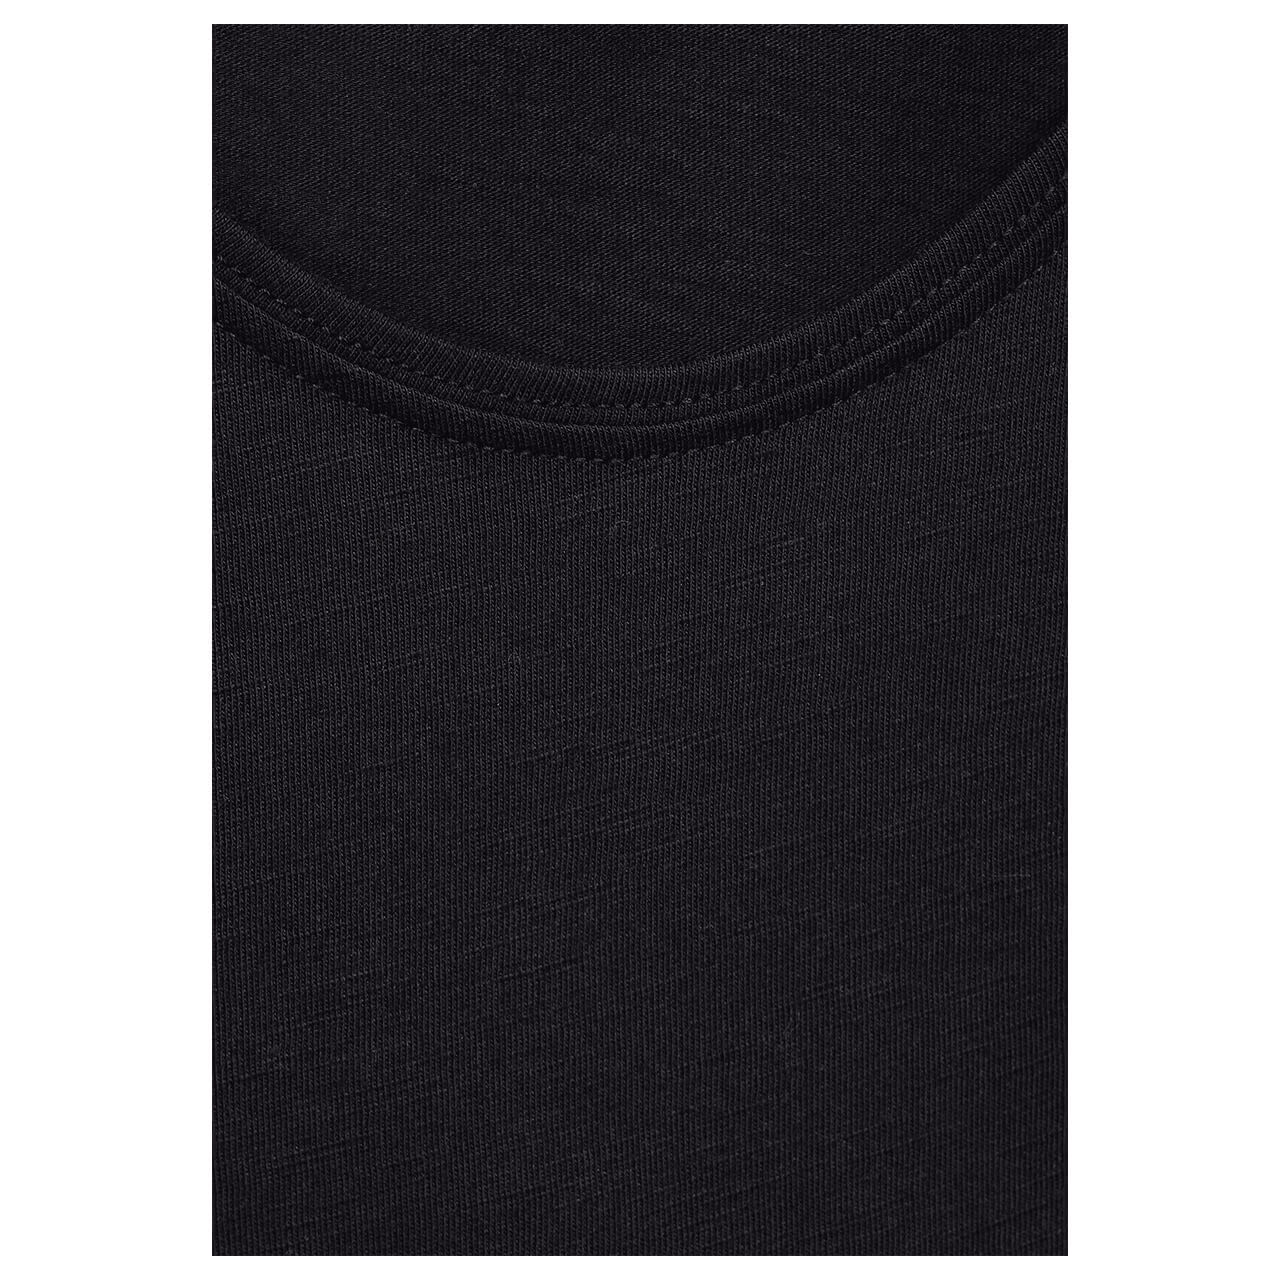 Street One Damen T-Shirt Gerda black